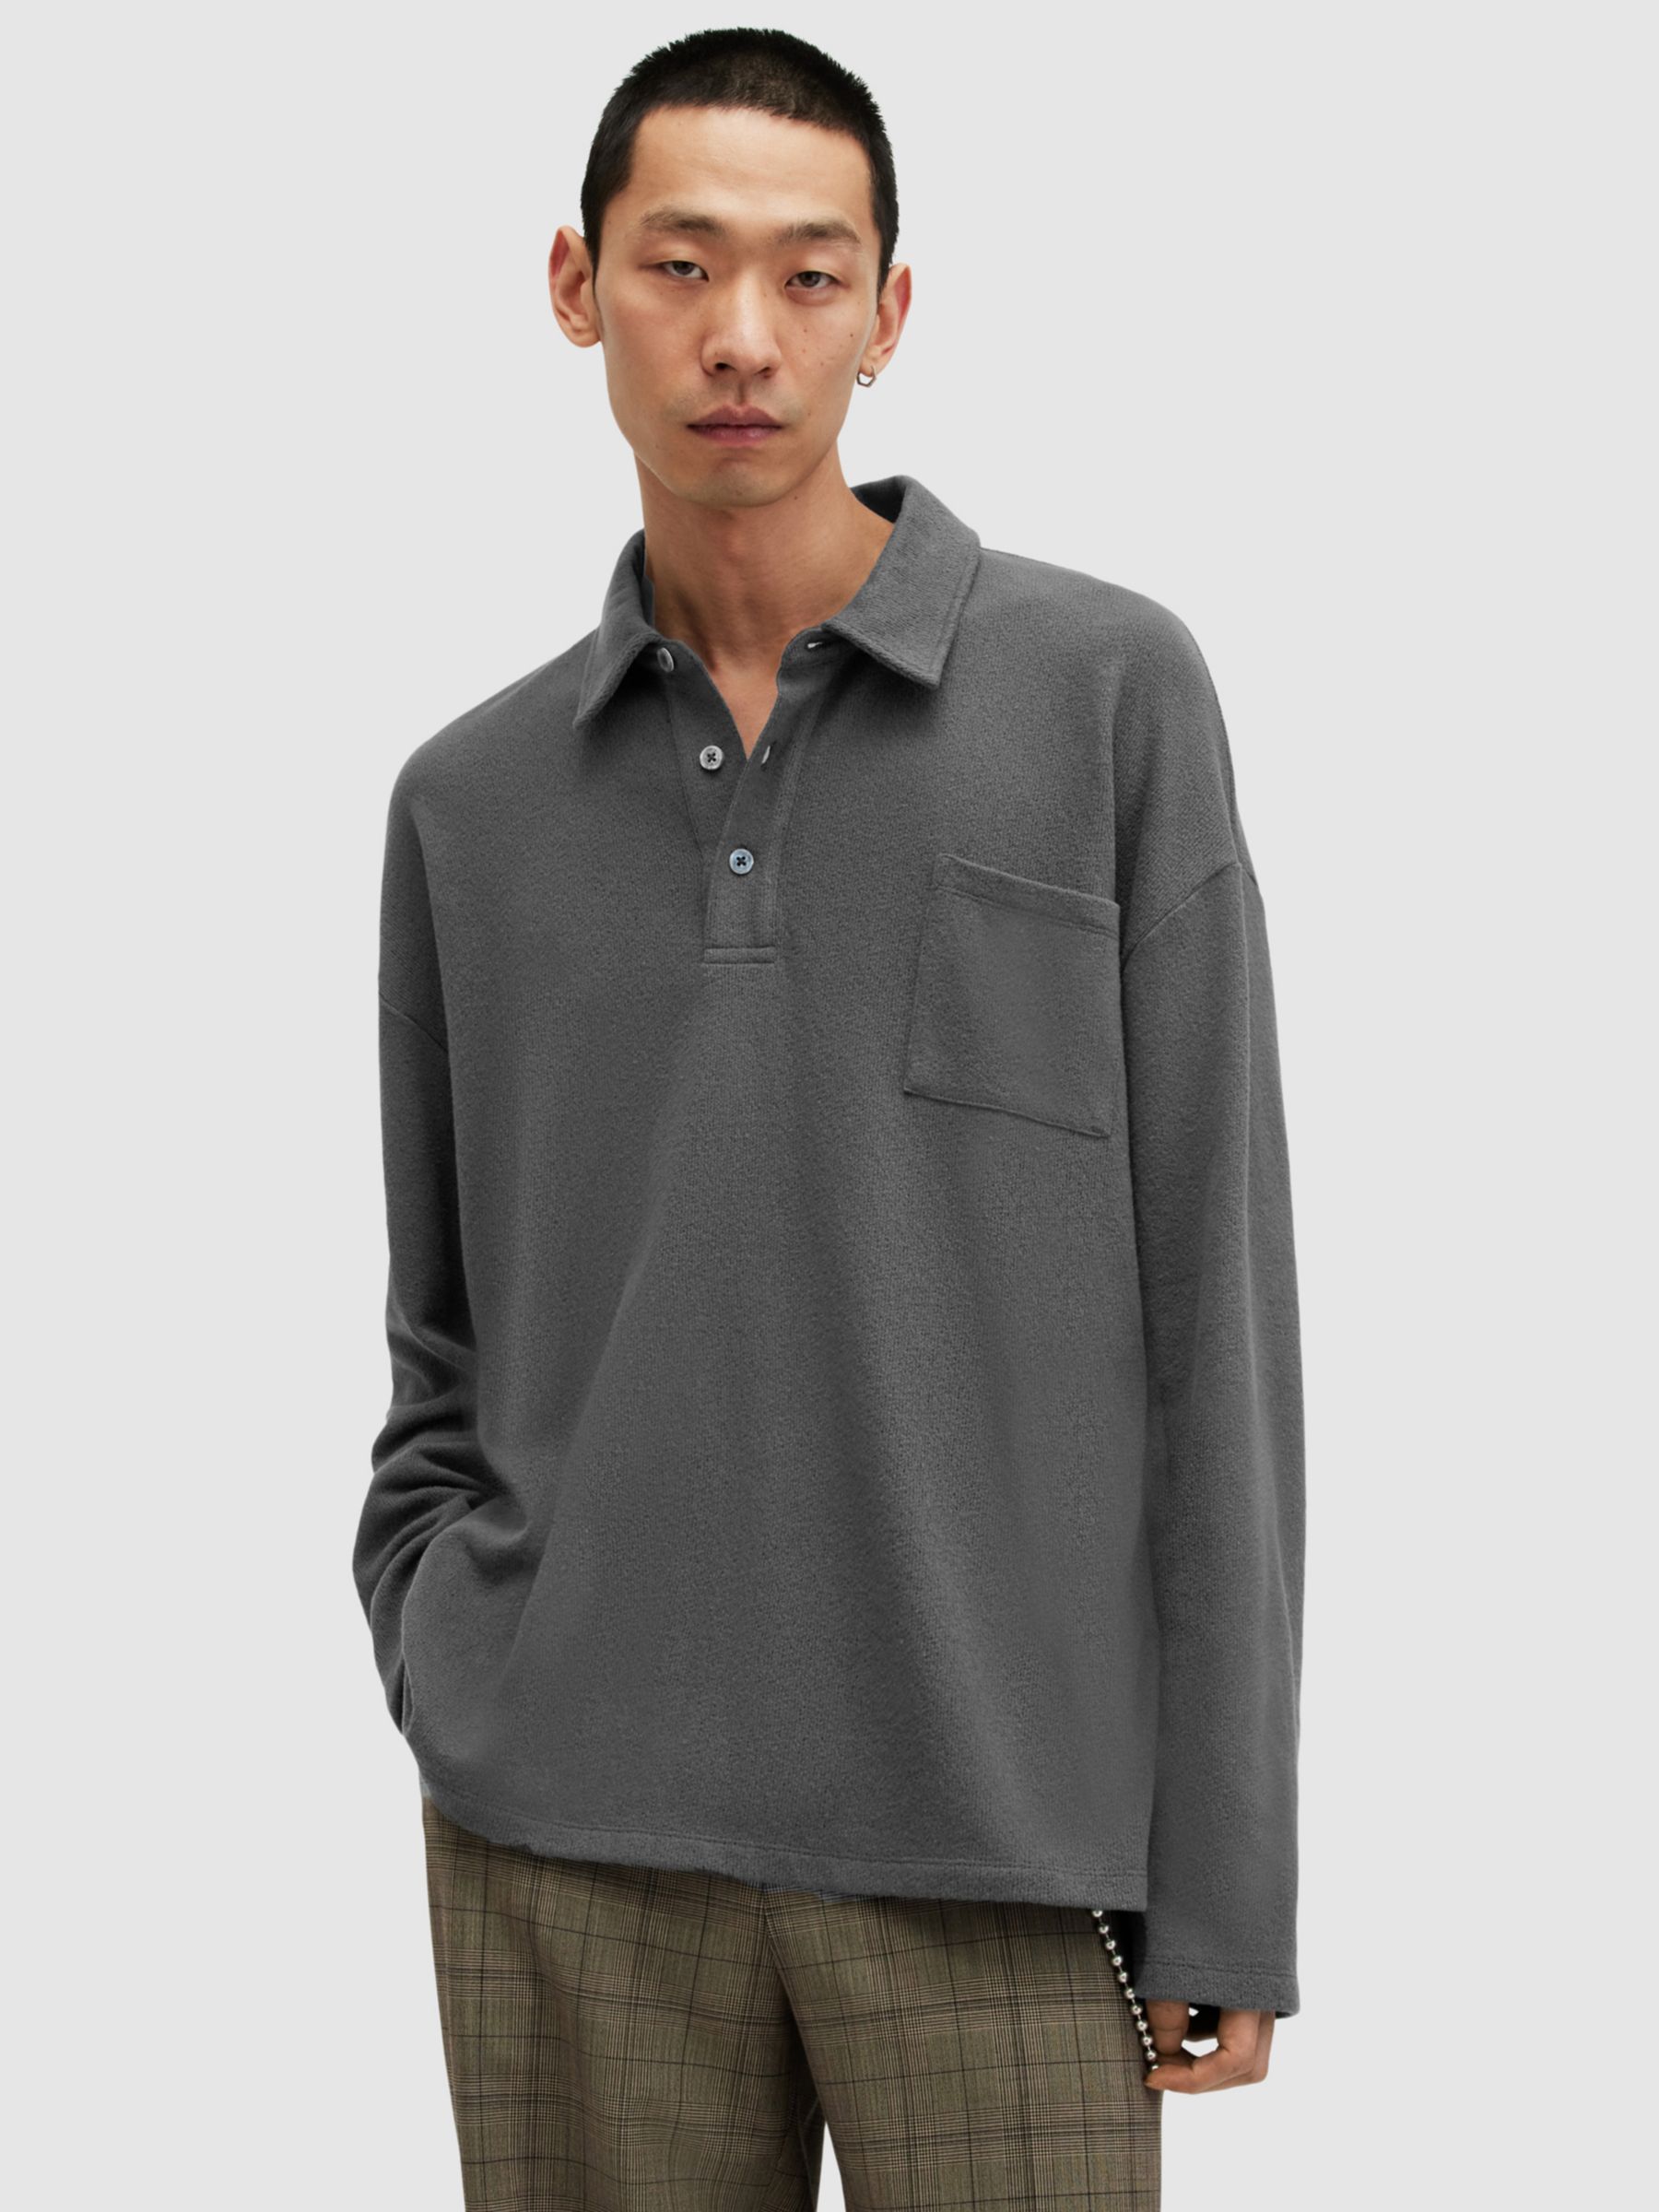 AllSaints Eris Long Sleeve Polo Shirt, Washed Black, L